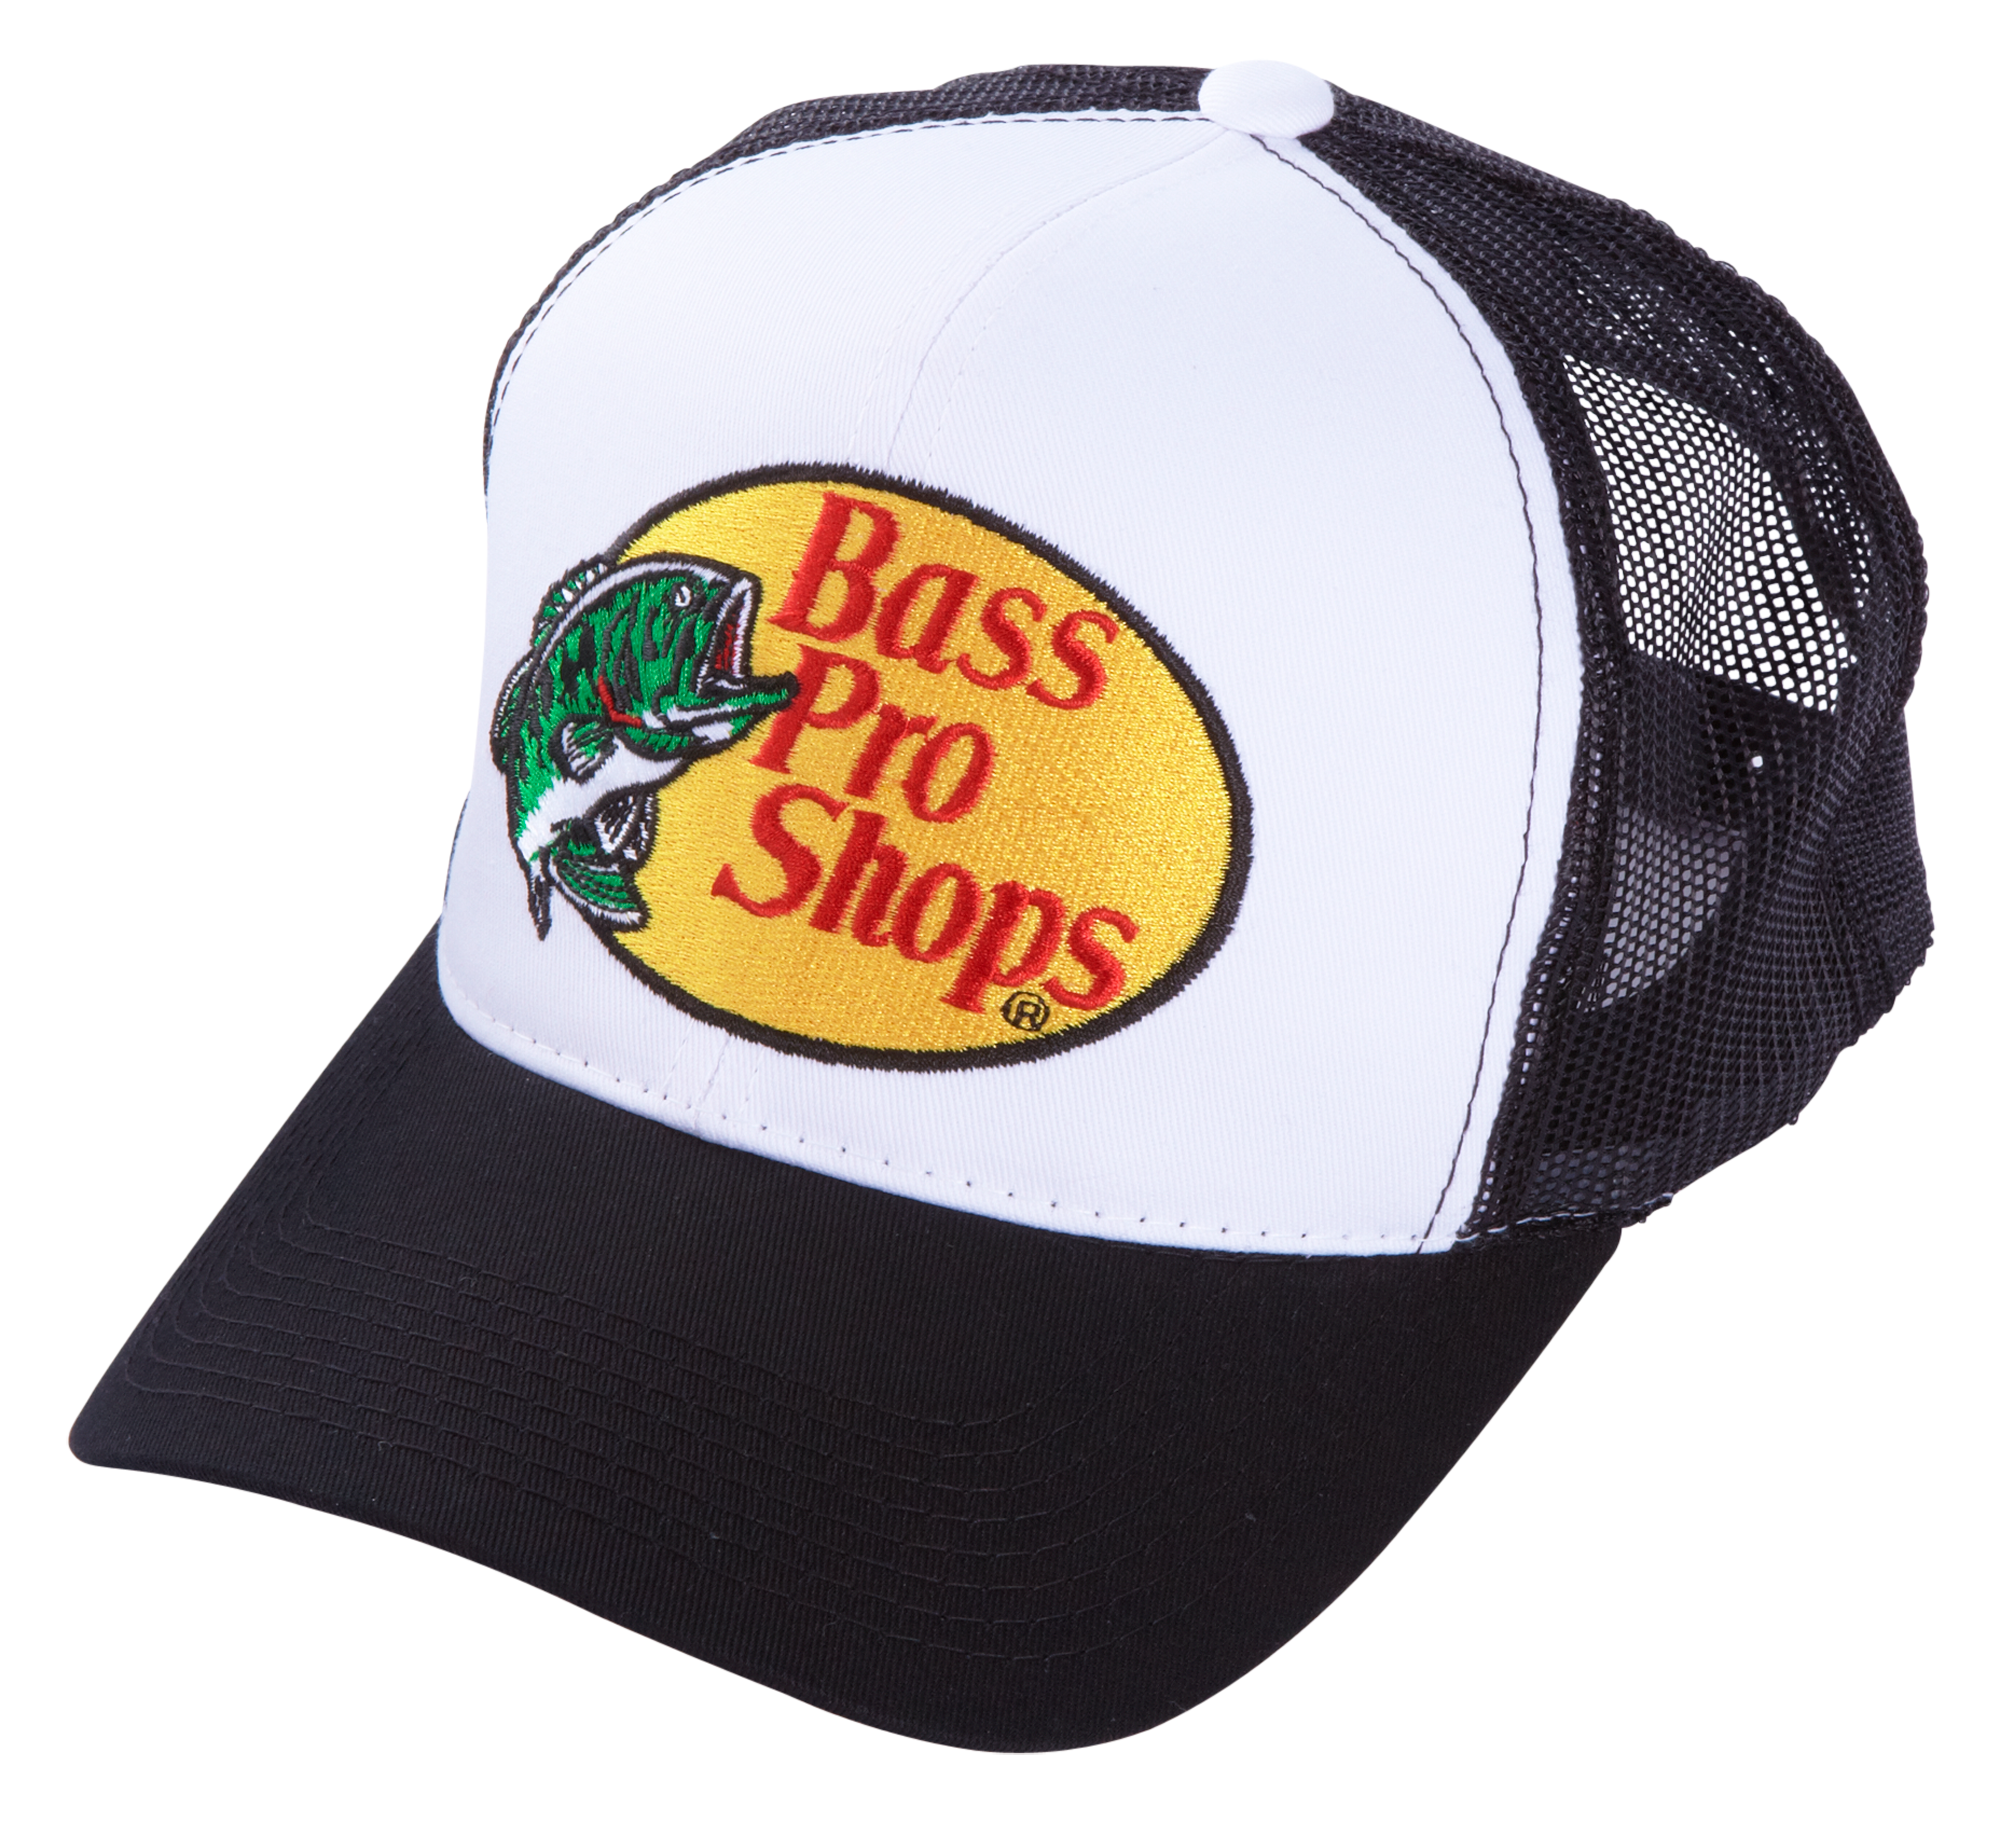 Bass pro shopping. Bass Pro shops кепка. Бейсболка Cabelas. Магазины Bass Pro shop. Бейсболка с сеткой.